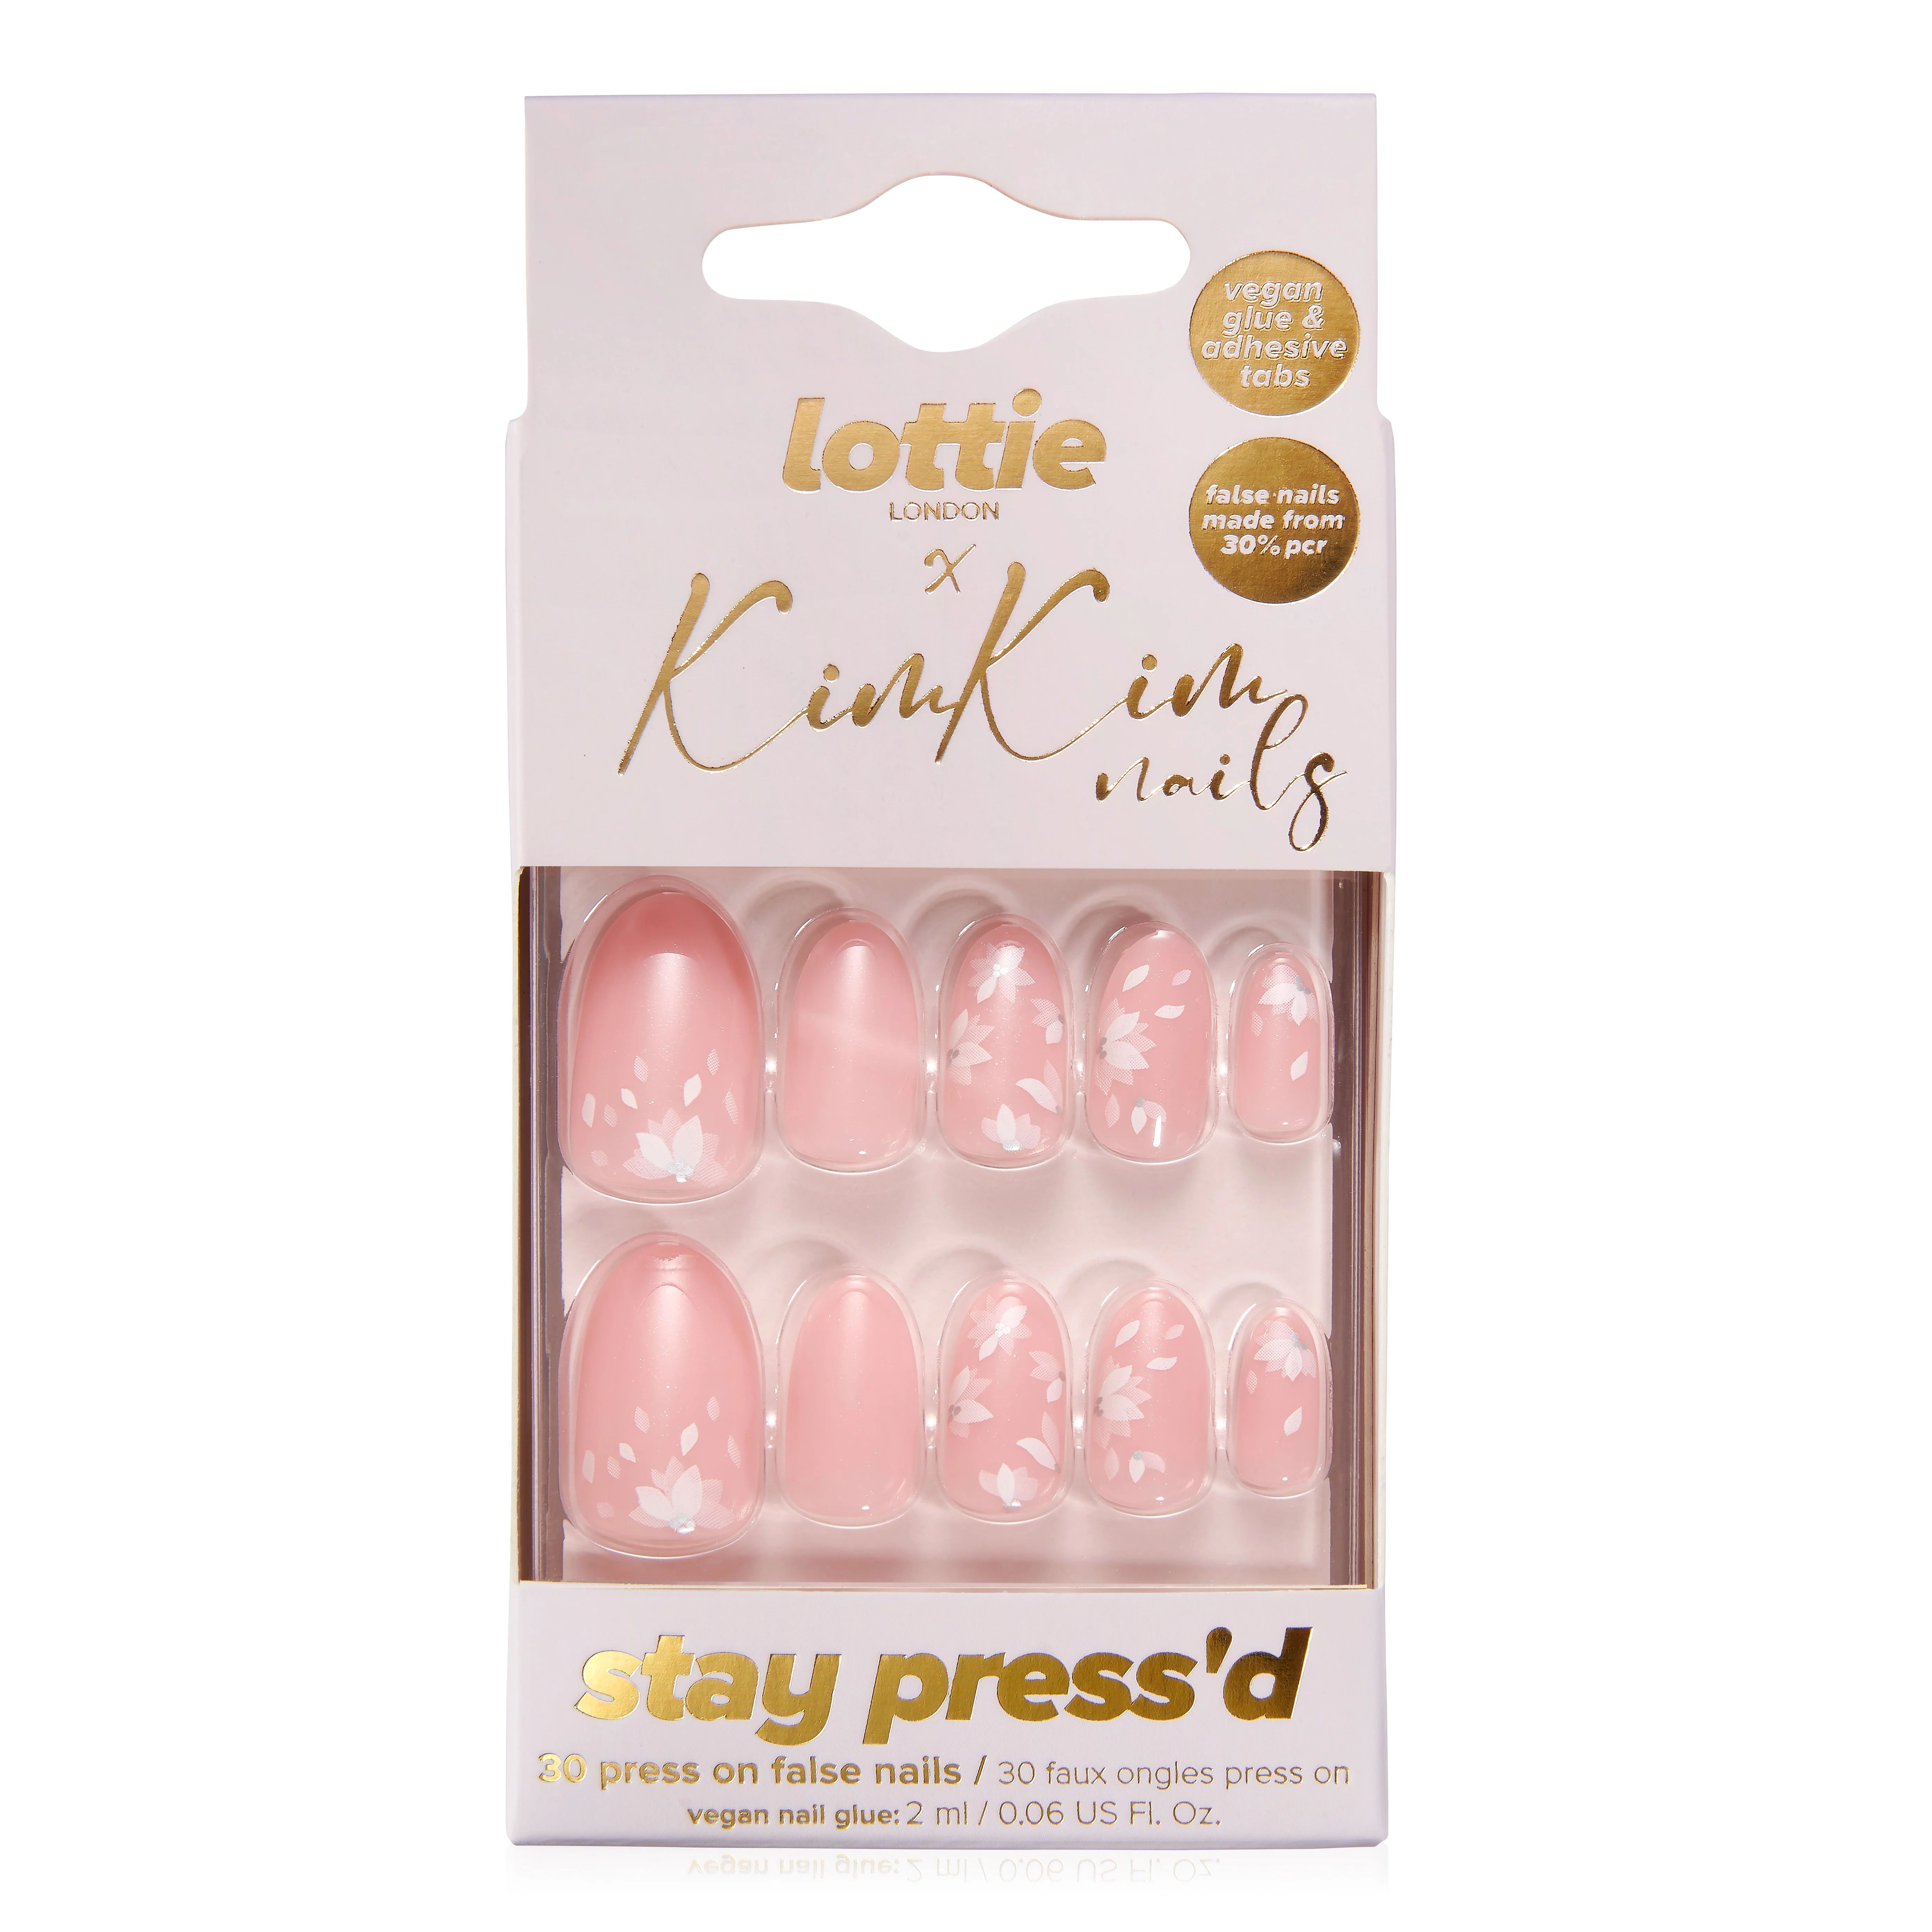 Lottie London x Kim Kim Nails, Press On False Nails Set, rounded almond shape, Glazed and Unfazed | Walmart (US)